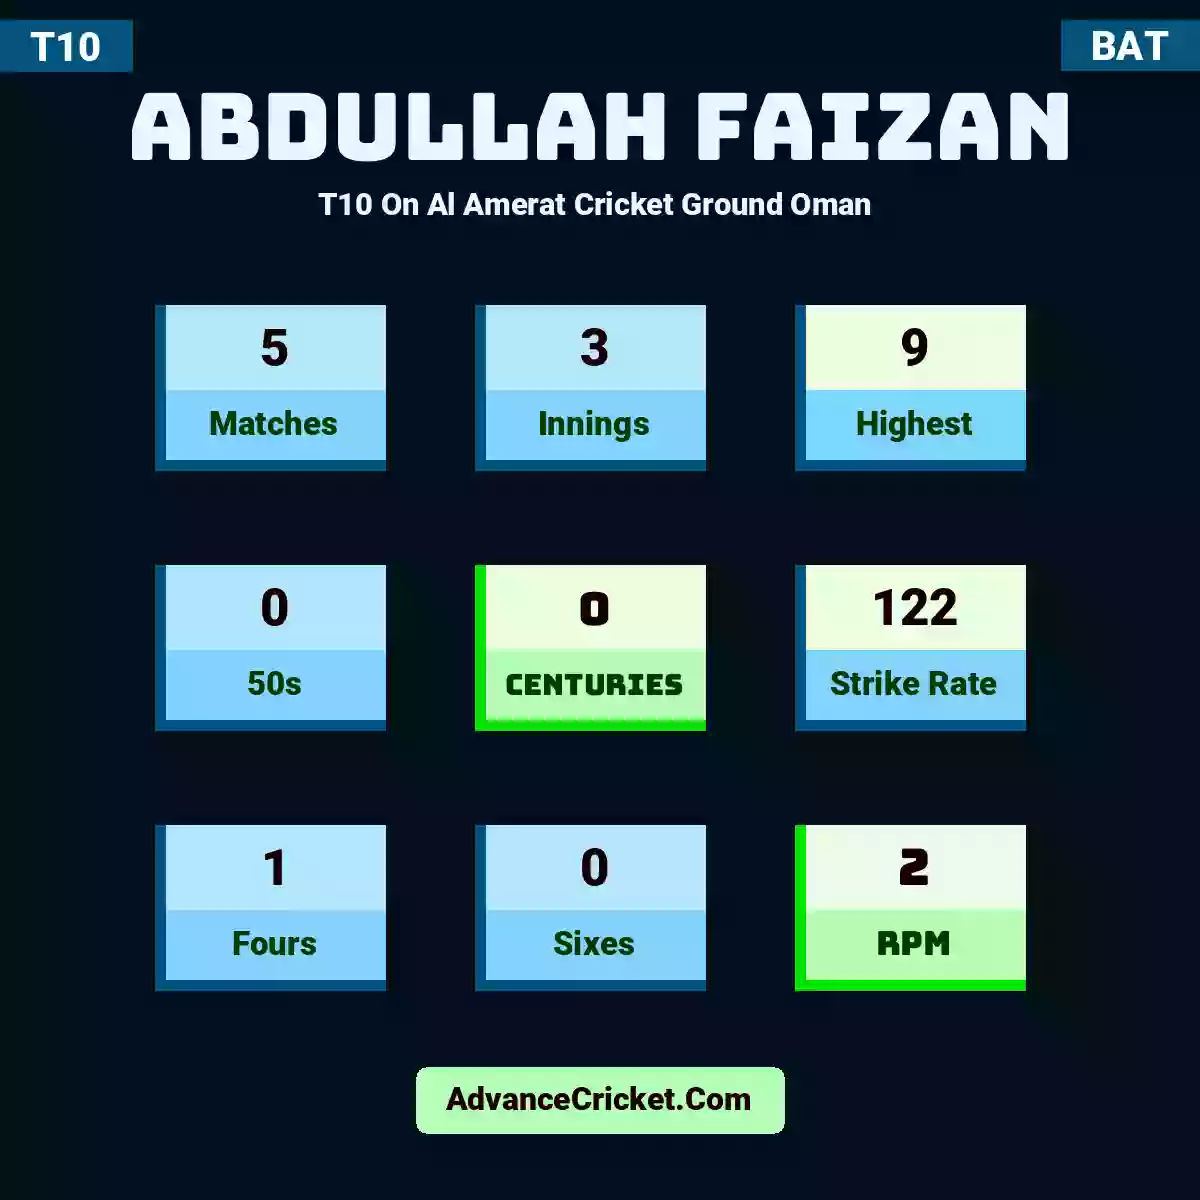 Abdullah Faizan T10  On Al Amerat Cricket Ground Oman , Abdullah Faizan played 5 matches, scored 9 runs as highest, 0 half-centuries, and 0 centuries, with a strike rate of 122. A.Faizan hit 1 fours and 0 sixes, with an RPM of 2.